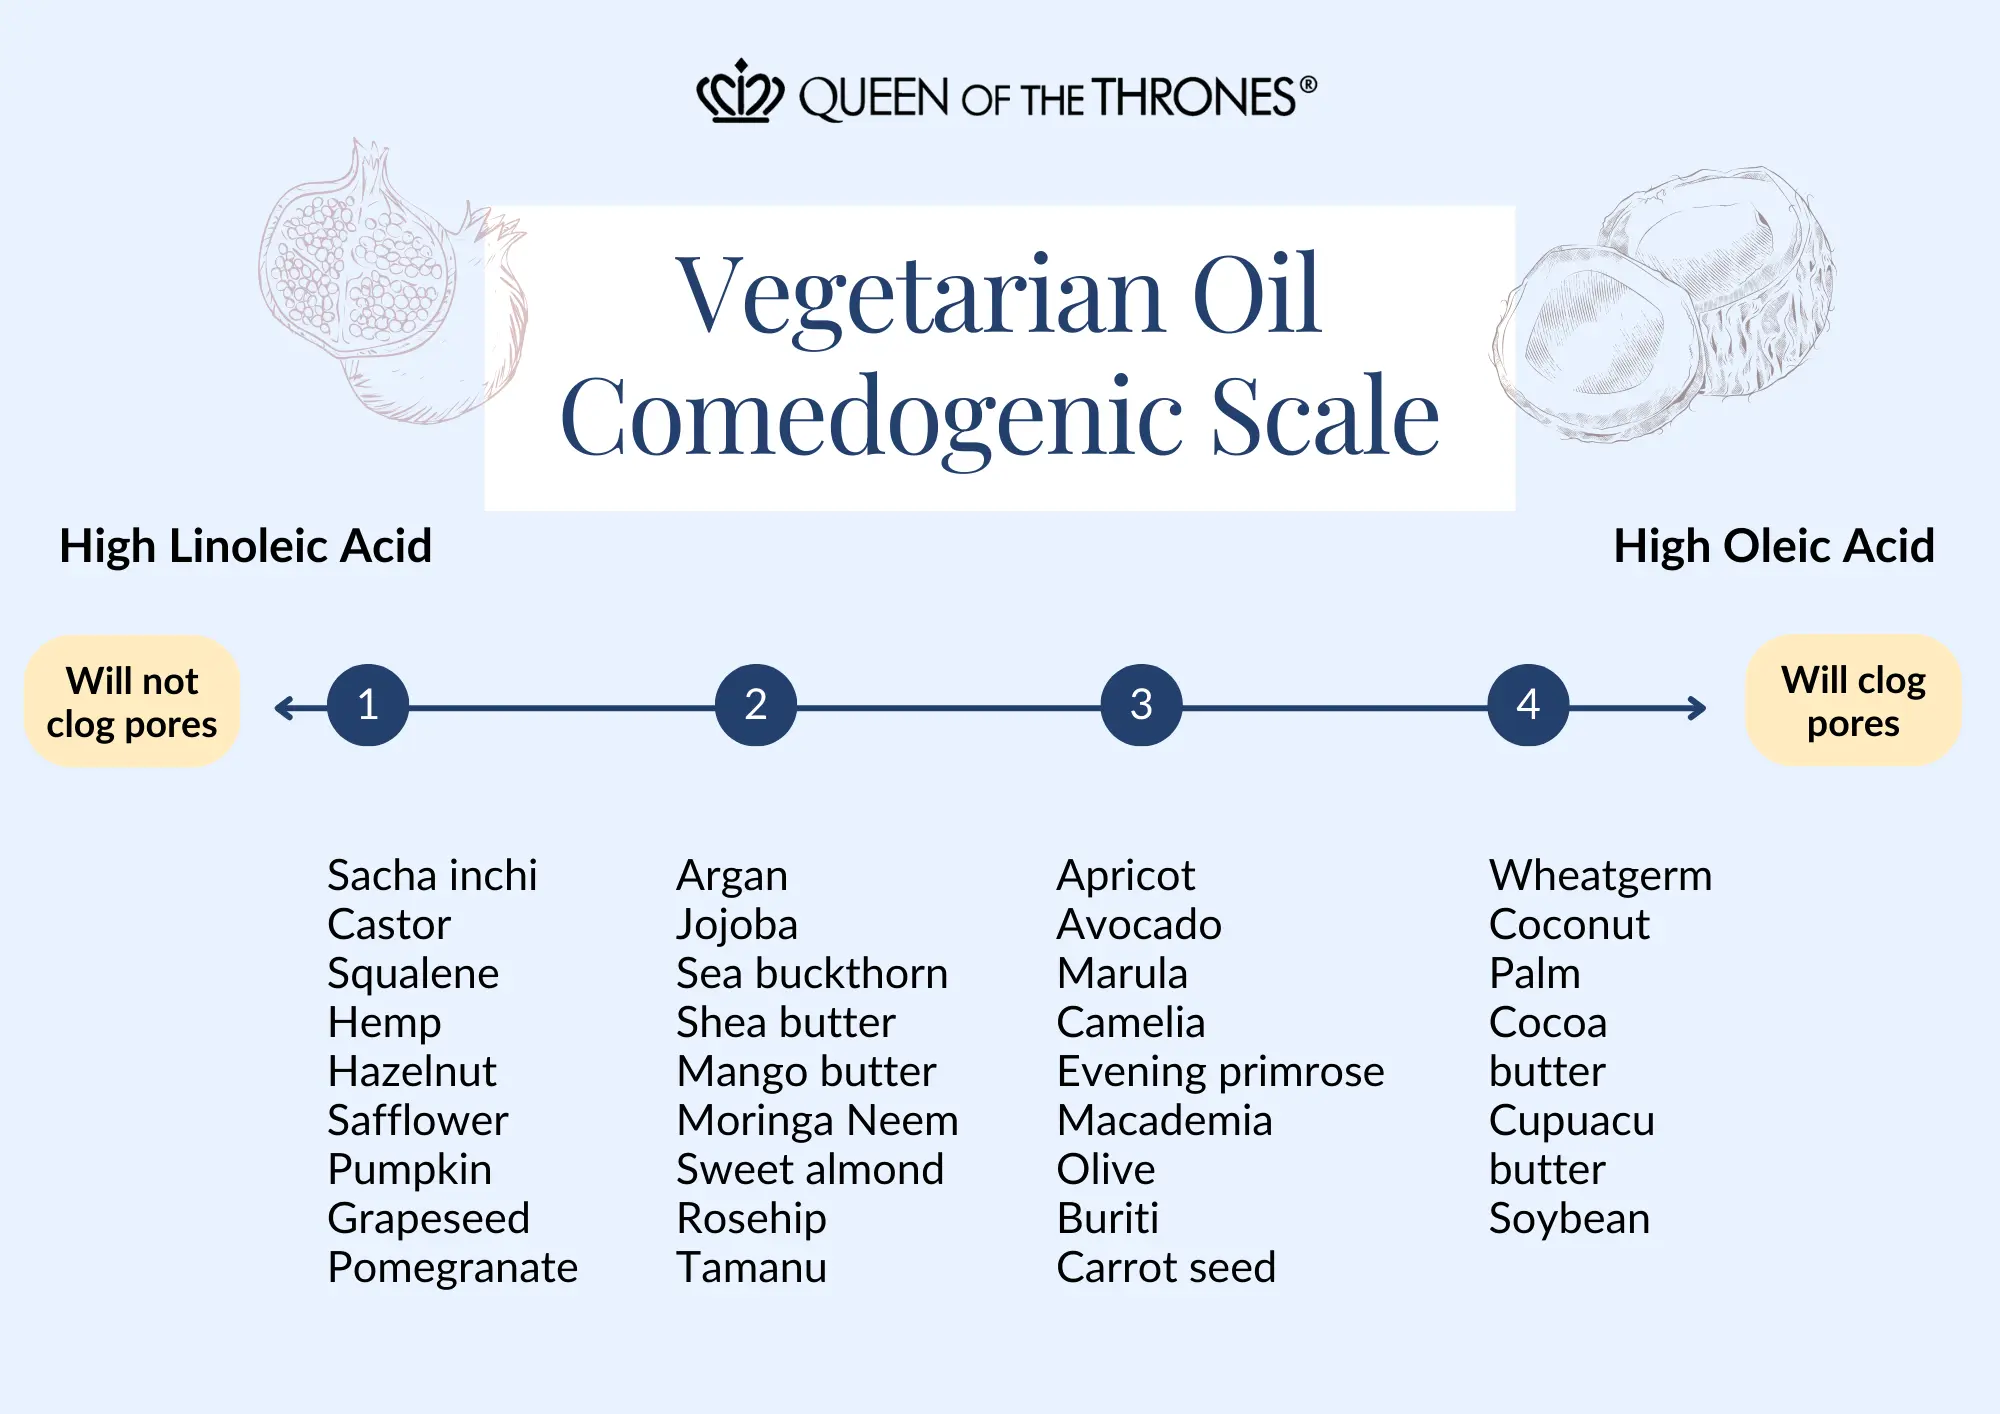 Queen of the Thrones vegetarian oil comedogenic scale